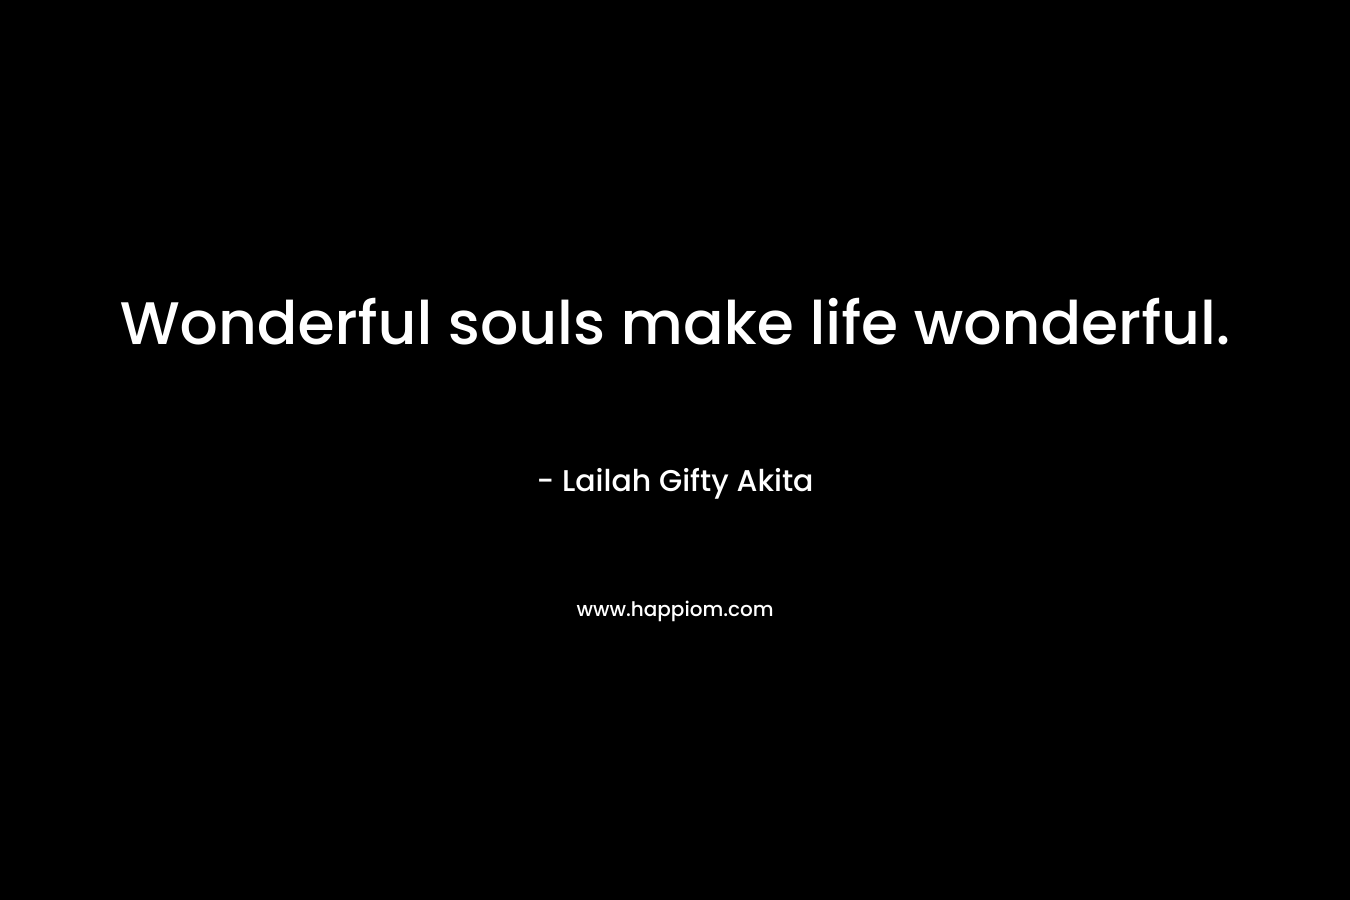 Wonderful souls make life wonderful.